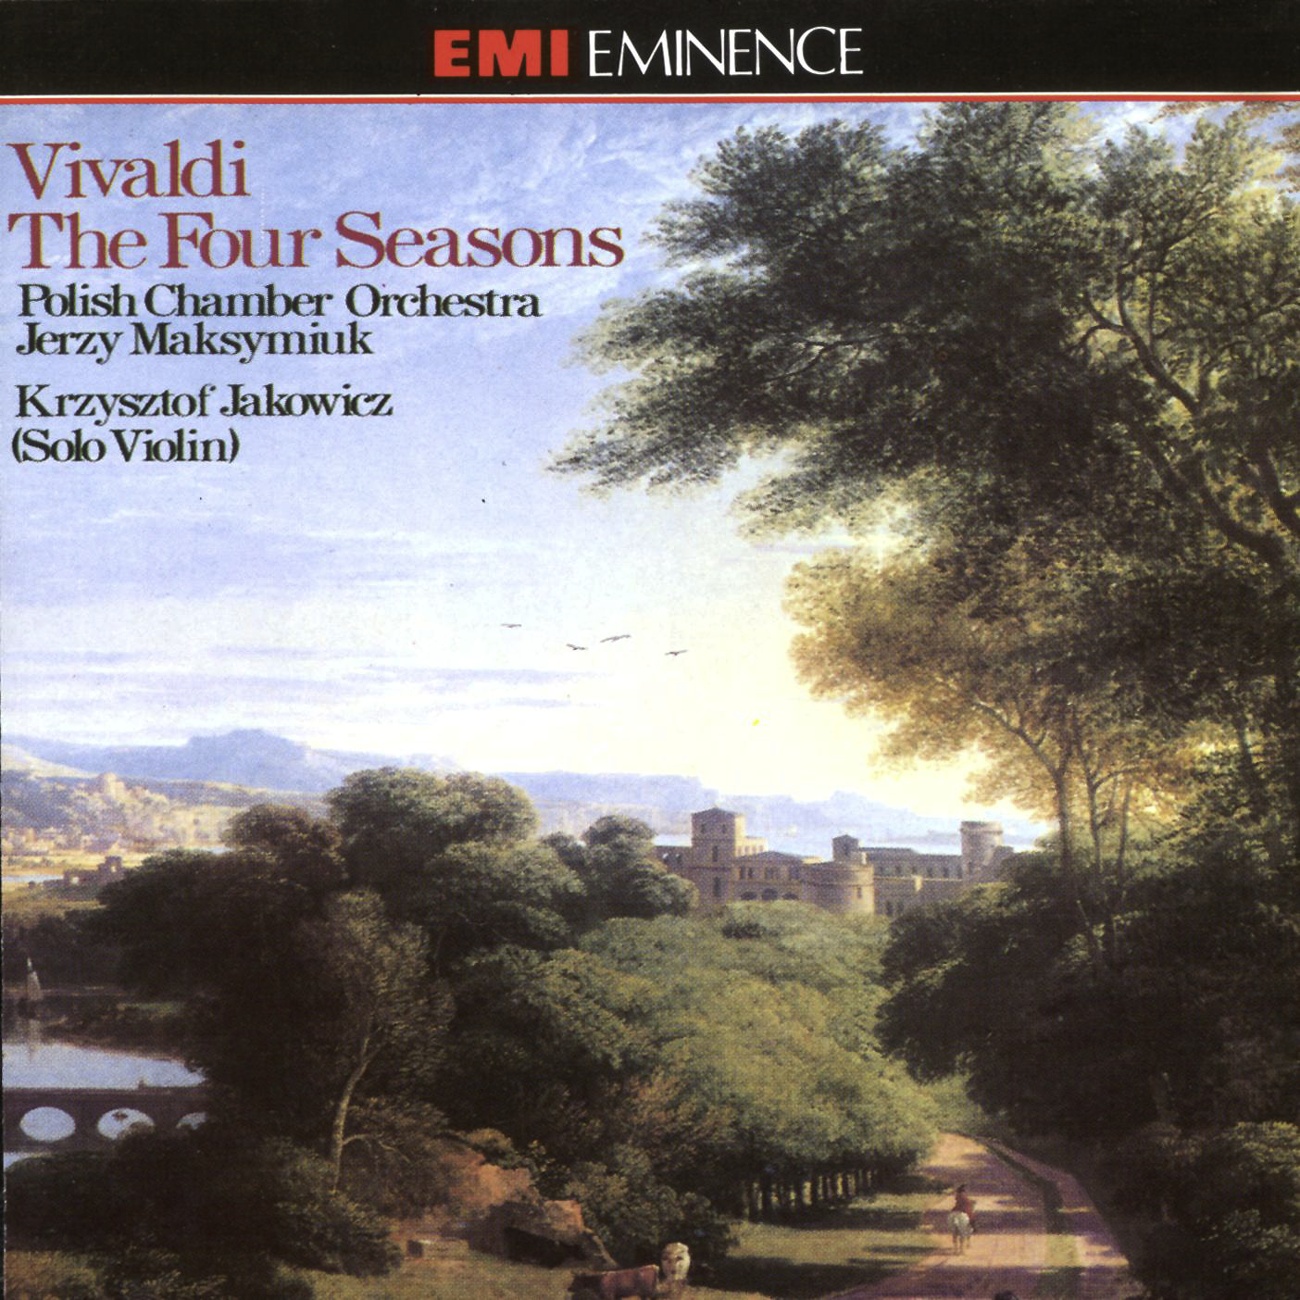 The Four Seasons Op. 8 Nos. 1-4 (1990 Digital Remaster), Concerto No. 2 in G minor (L'estate/ Summer) RV315 (Op. 8 No. 2): II.